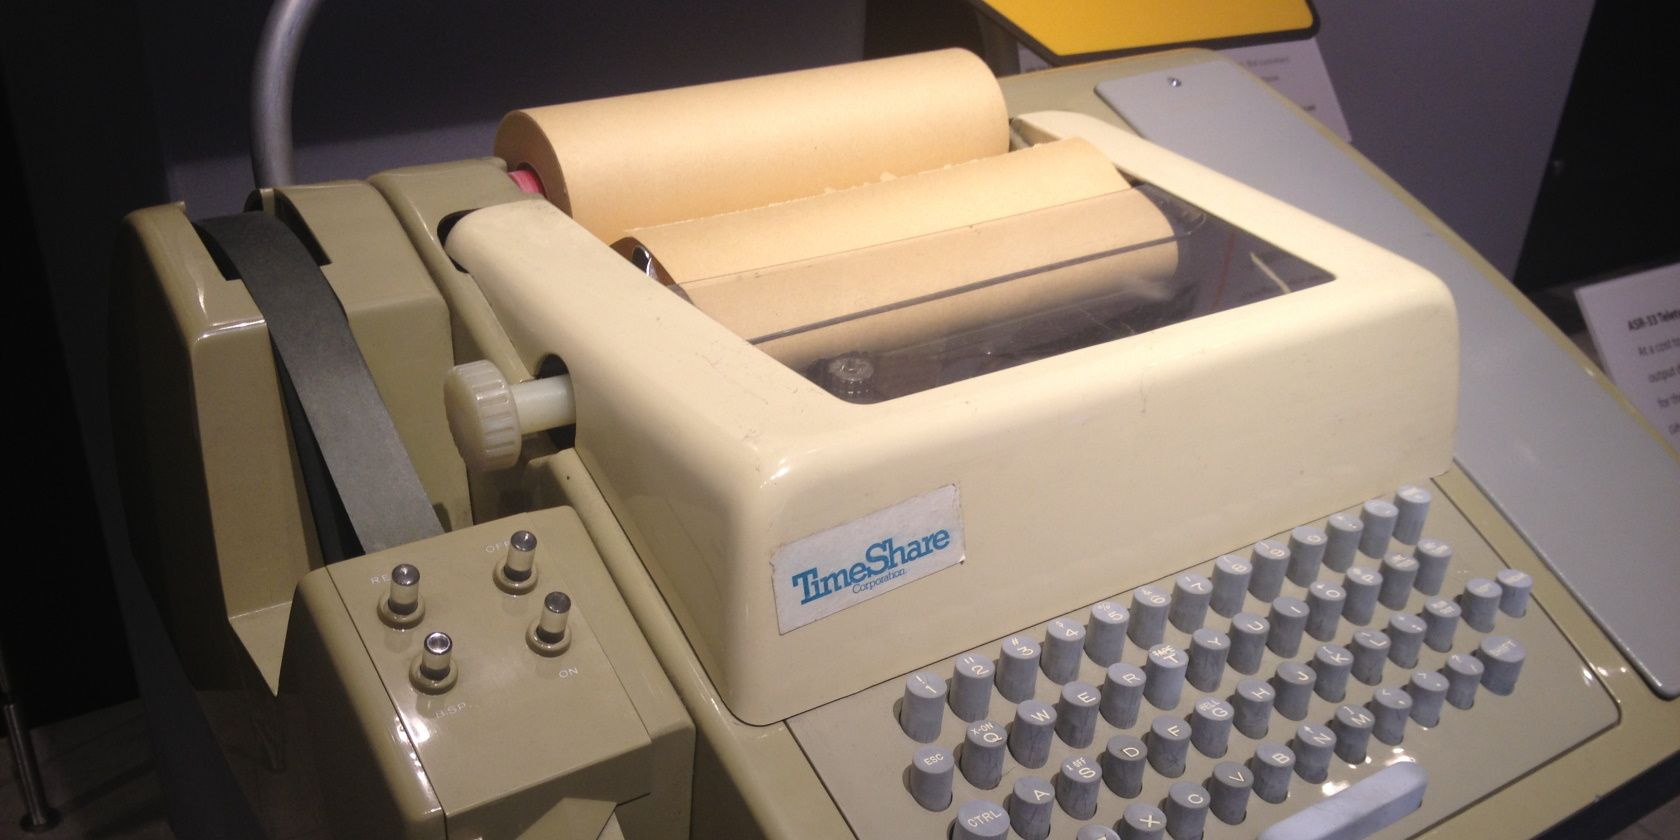 Teletype machine